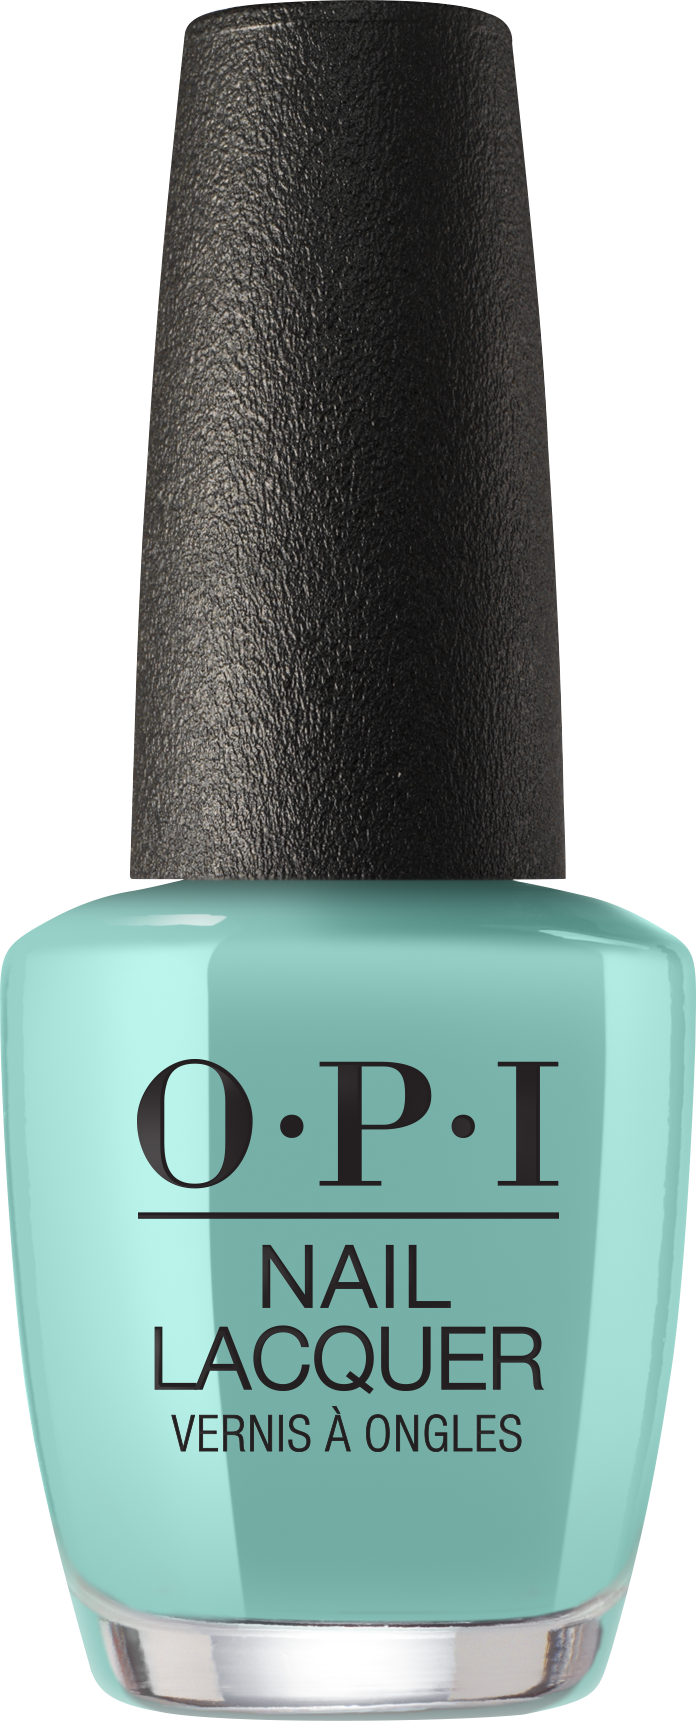 OPI Nail Polish - Verde nice to meet you (NL M84)